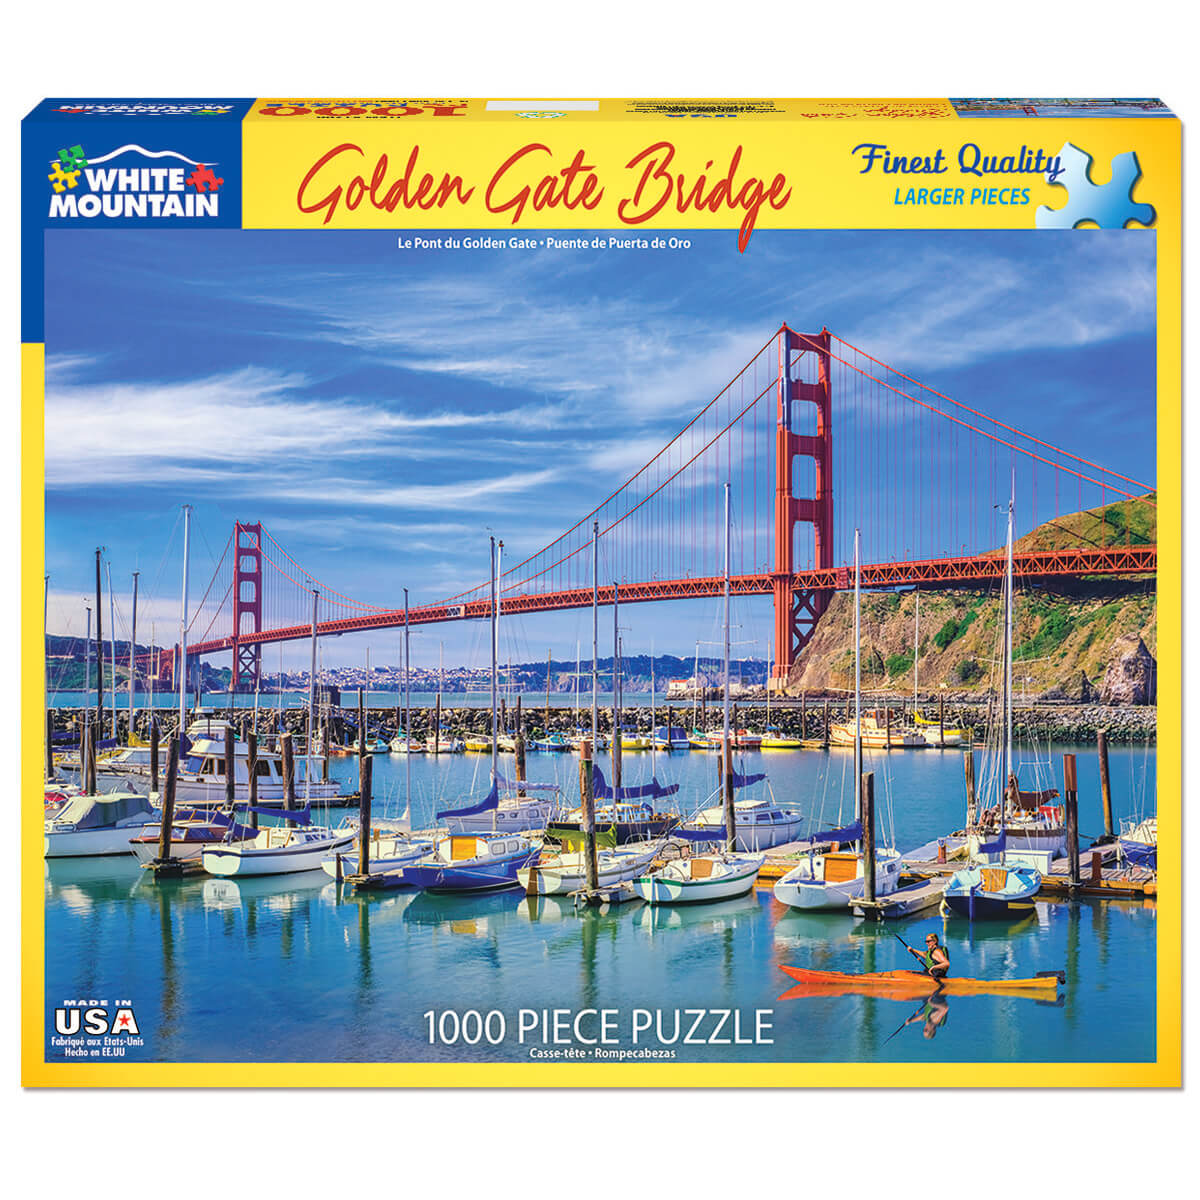 White Mountain Puzzles Golden Gate Bridge 1000 Piece Jigsaw Puzzle